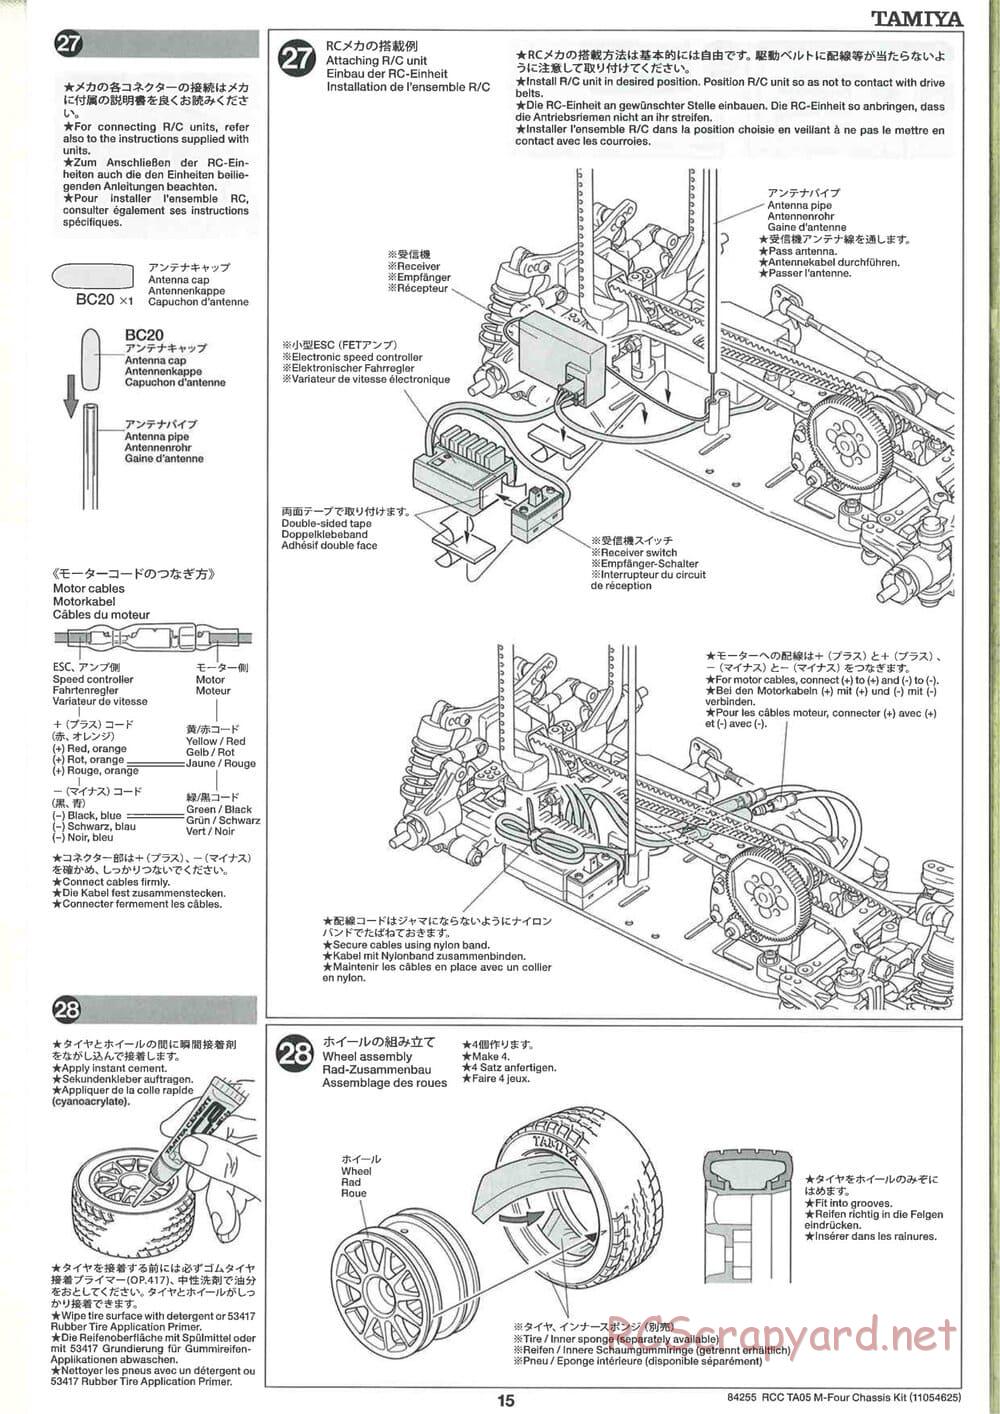 Tamiya - TA05 M-Four Chassis - Manual - Page 15